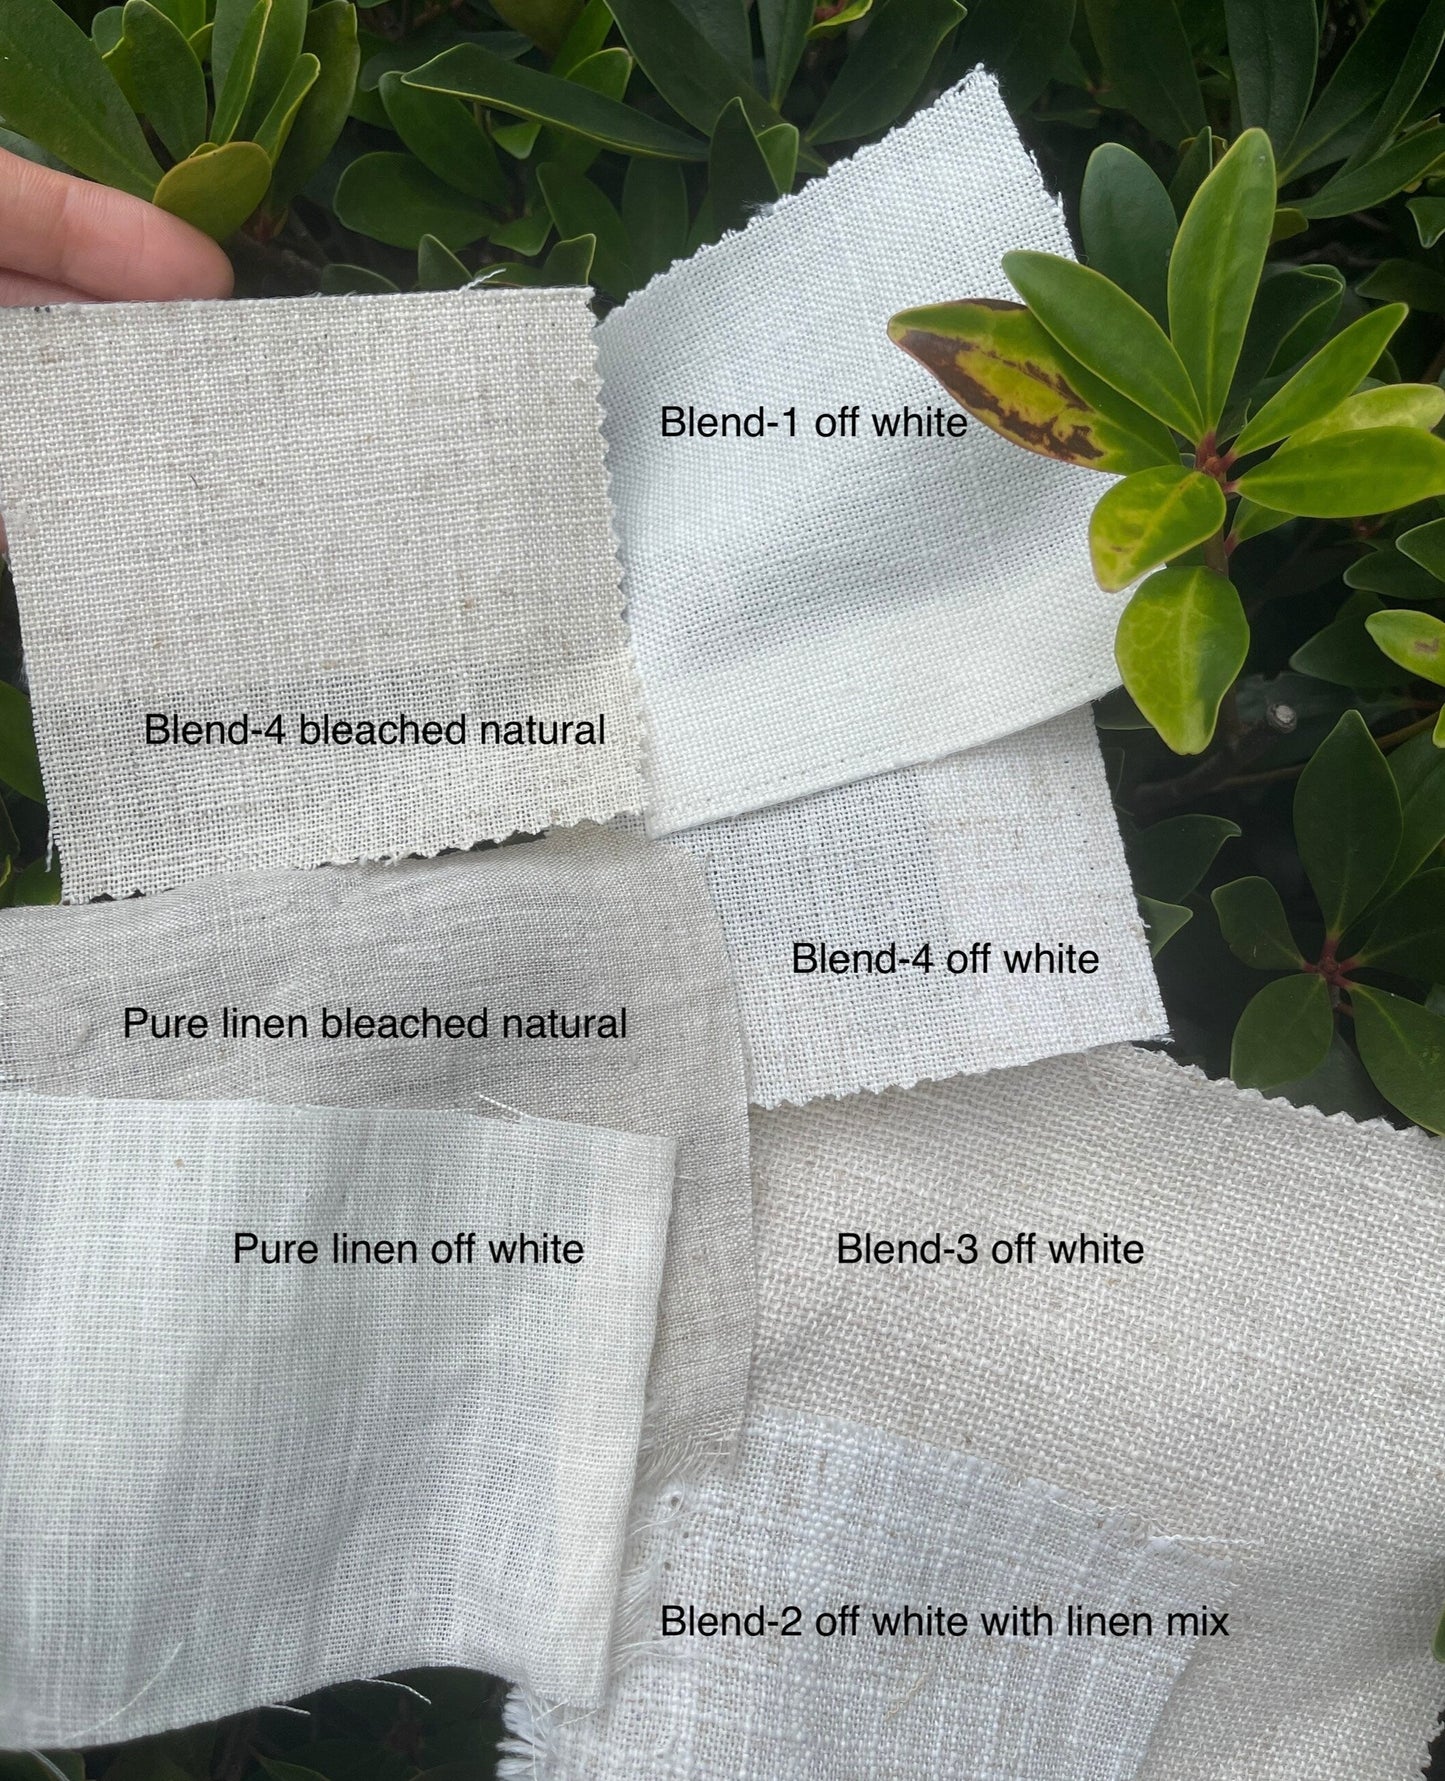 white linen fabric